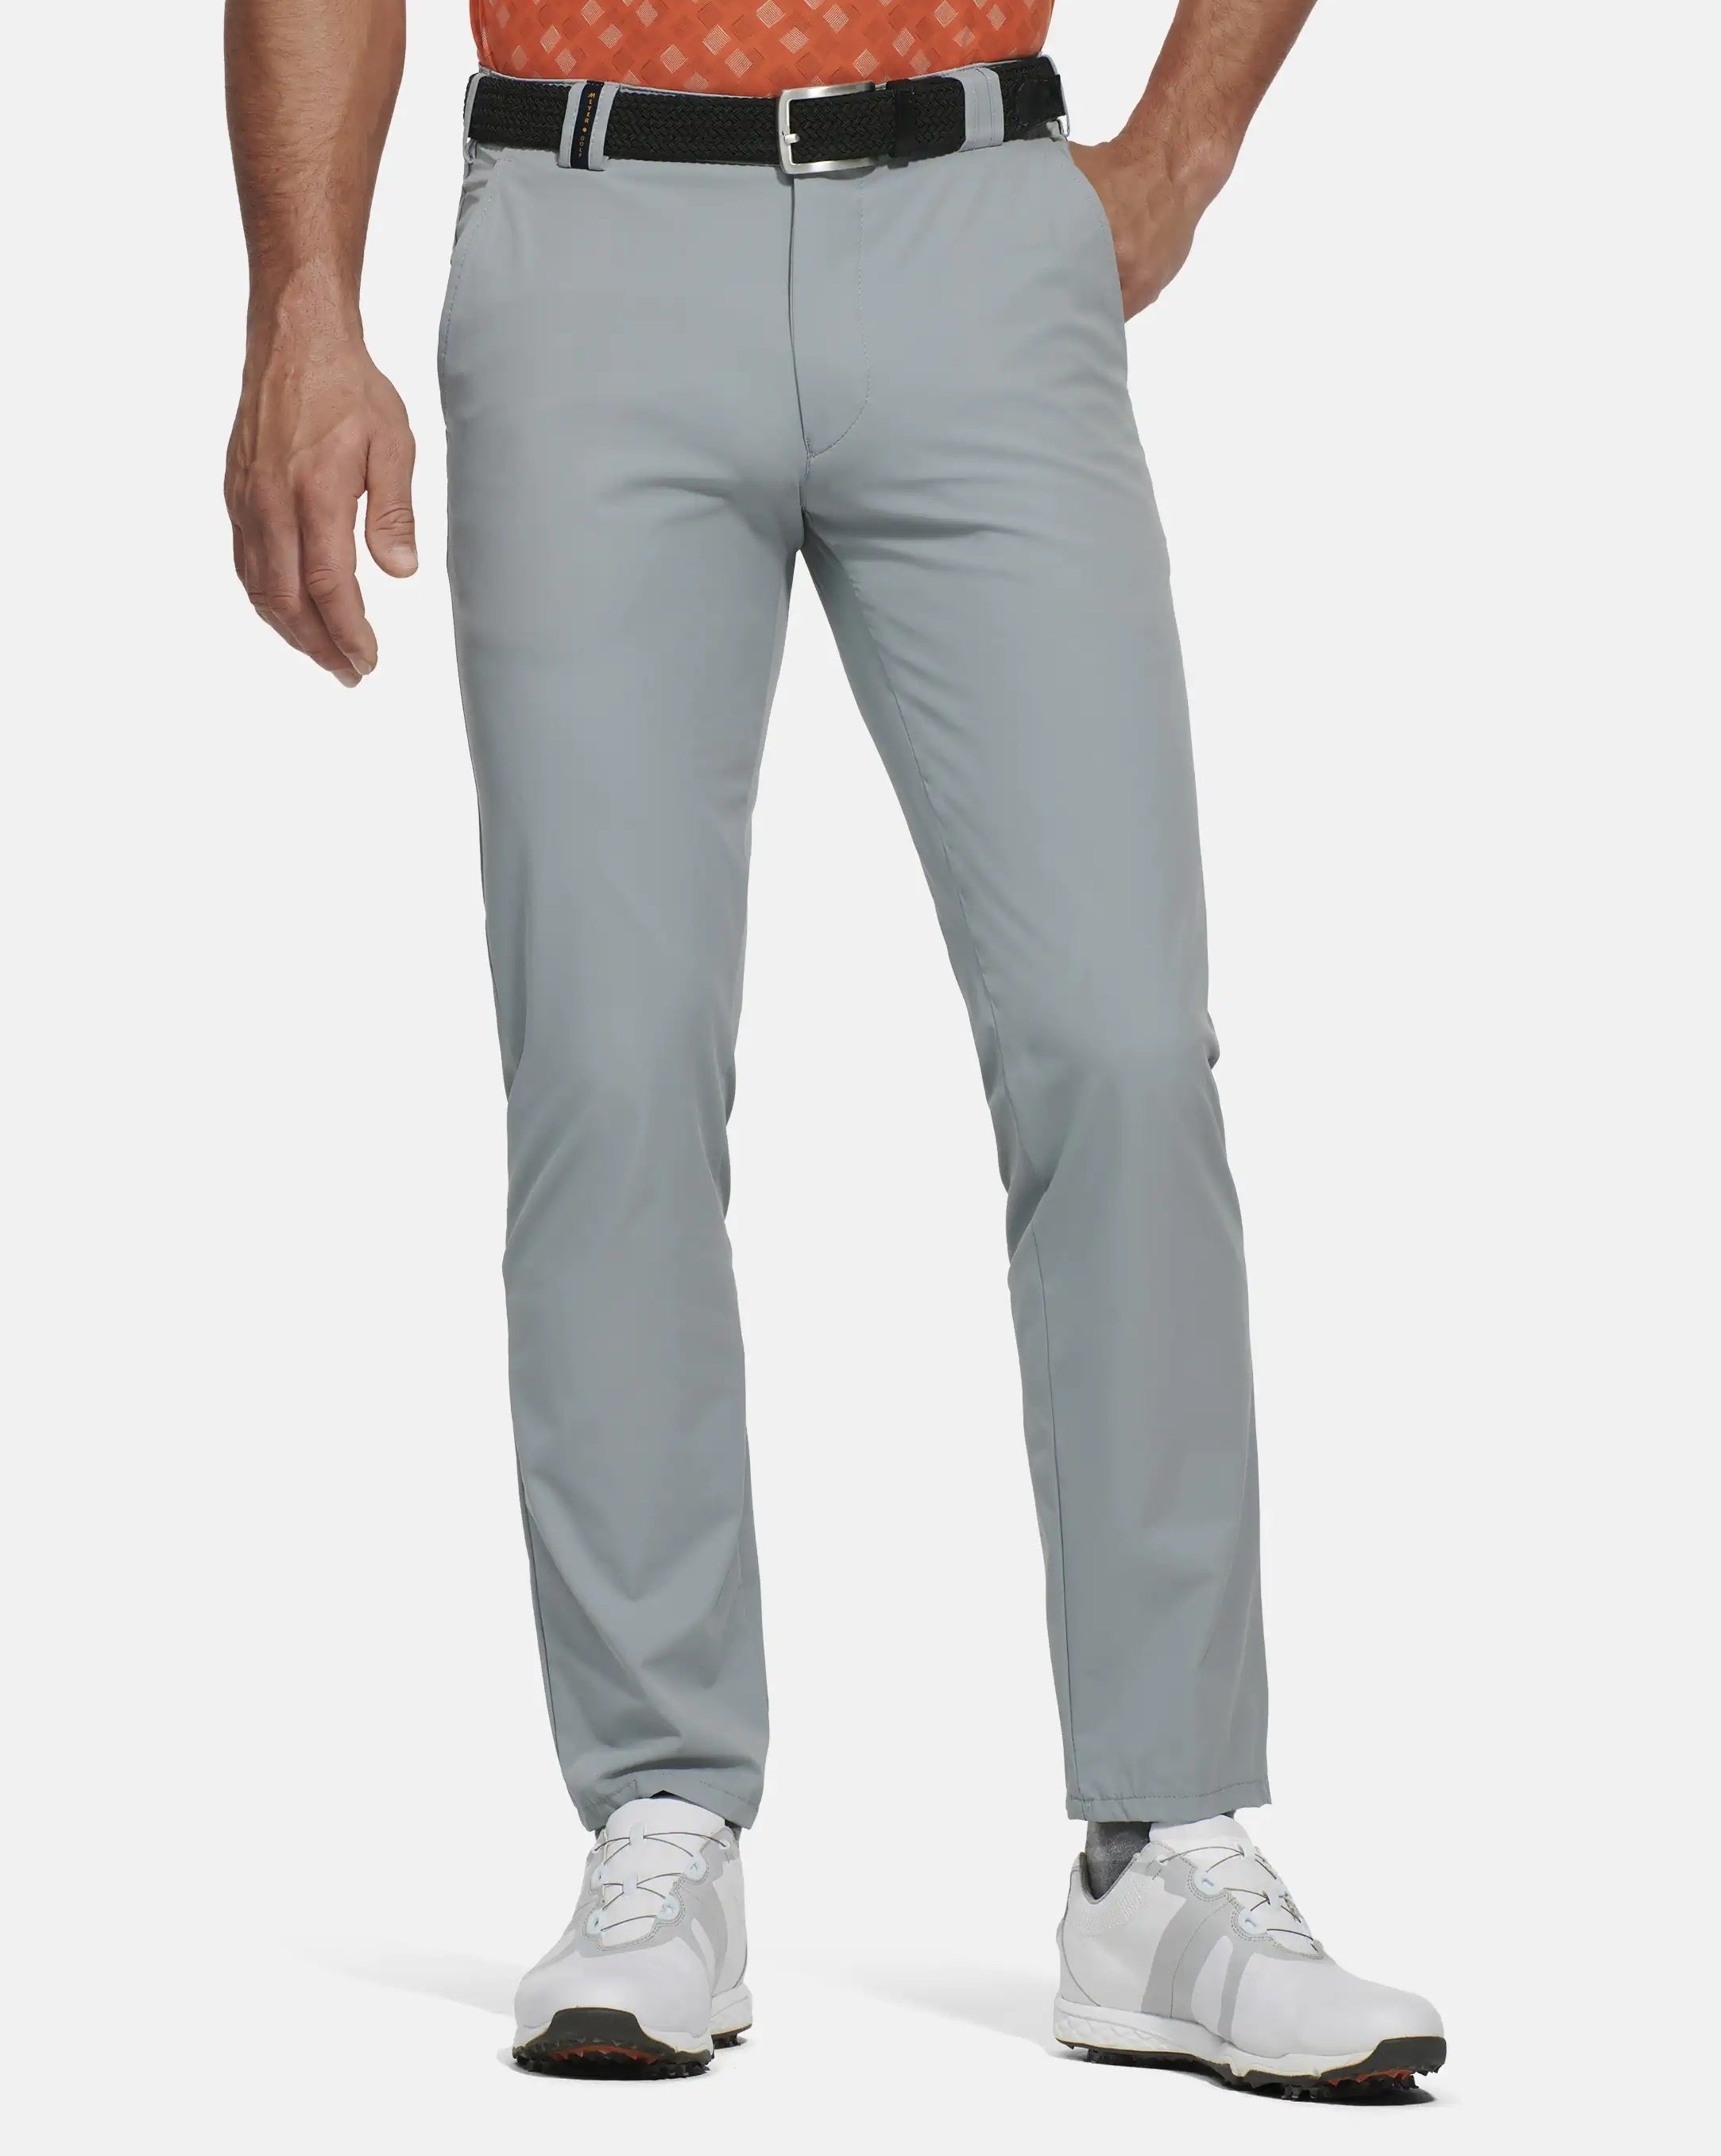 MEYER Golf Trousers - Augusta 8070 High Performance Chinos - Grey